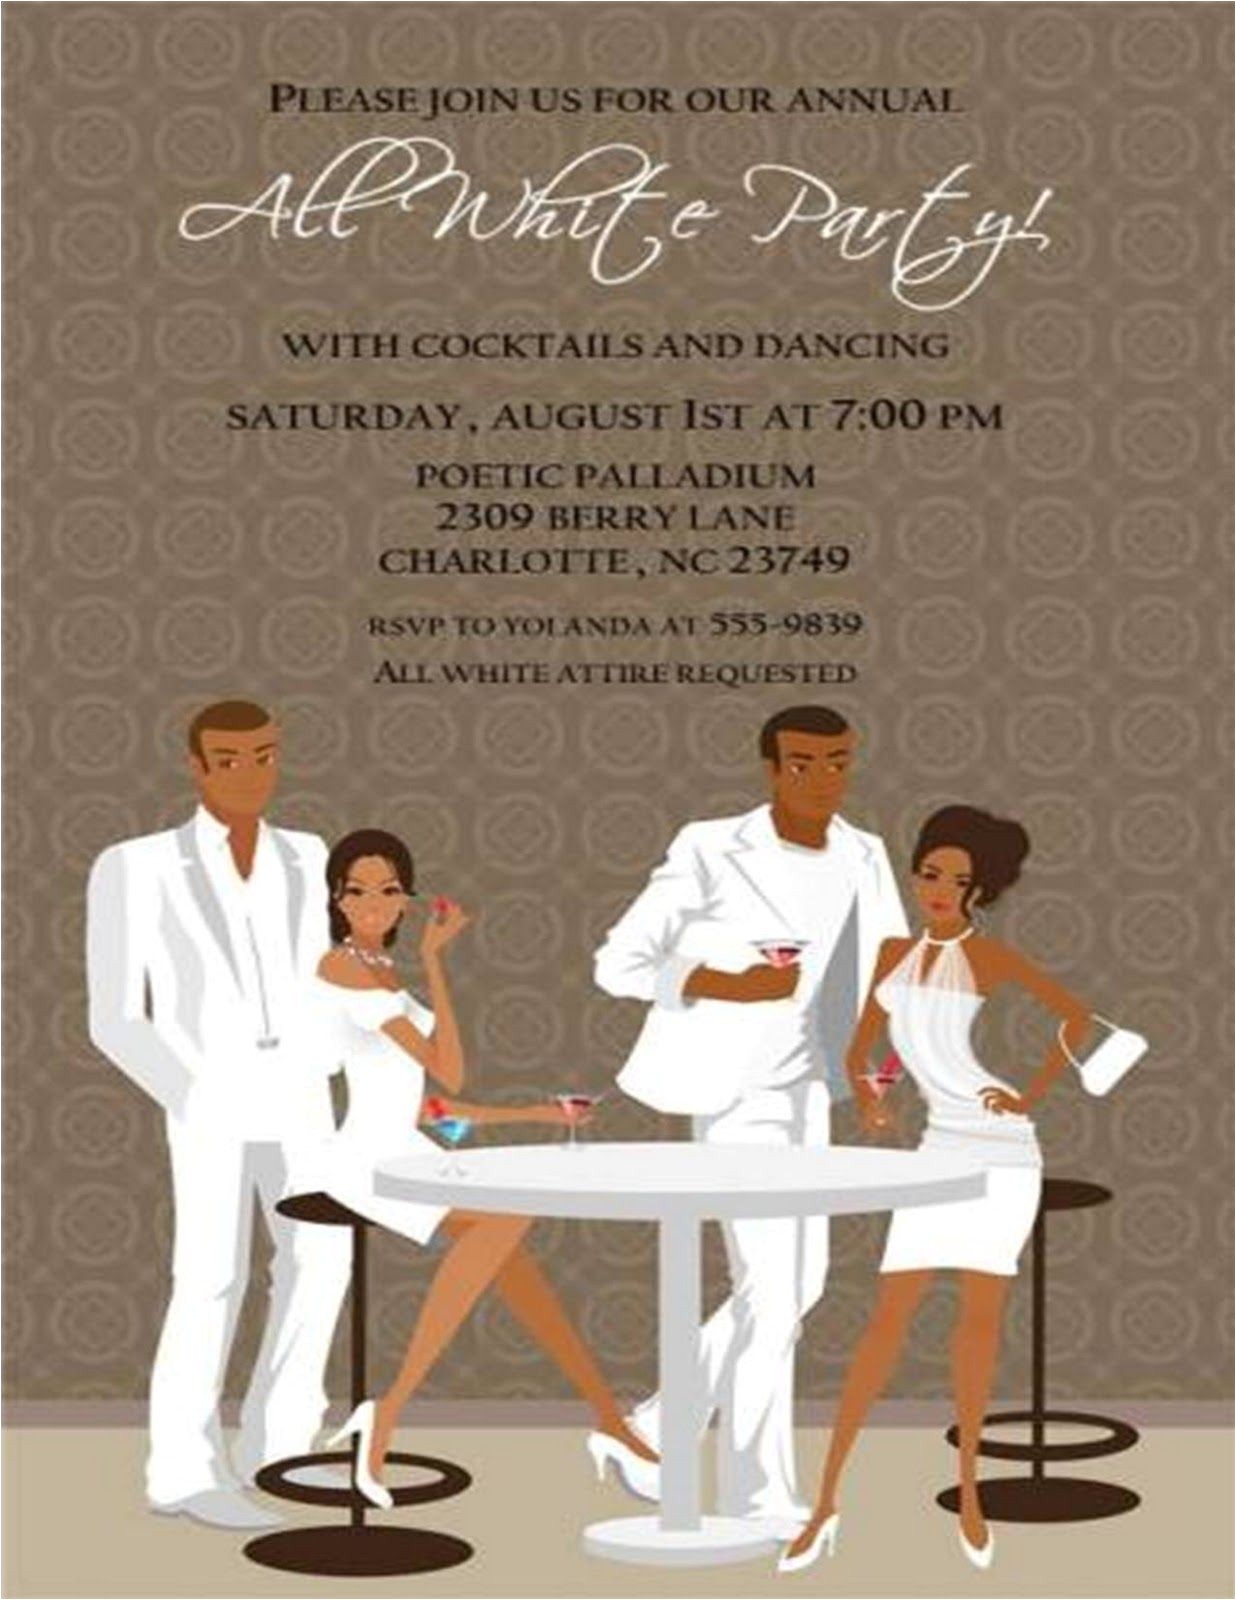 All White Party Invitation Ideas All White Party On Pinterest White Parties White Party